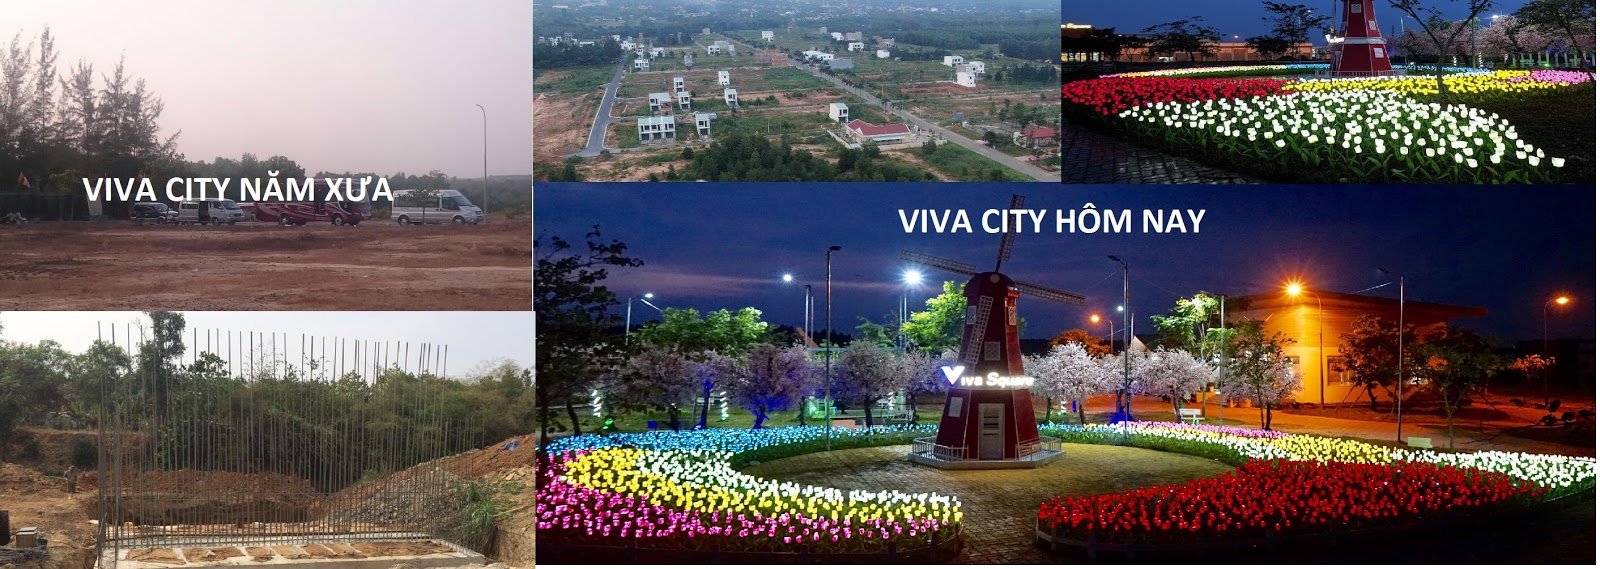 the viva city 2019